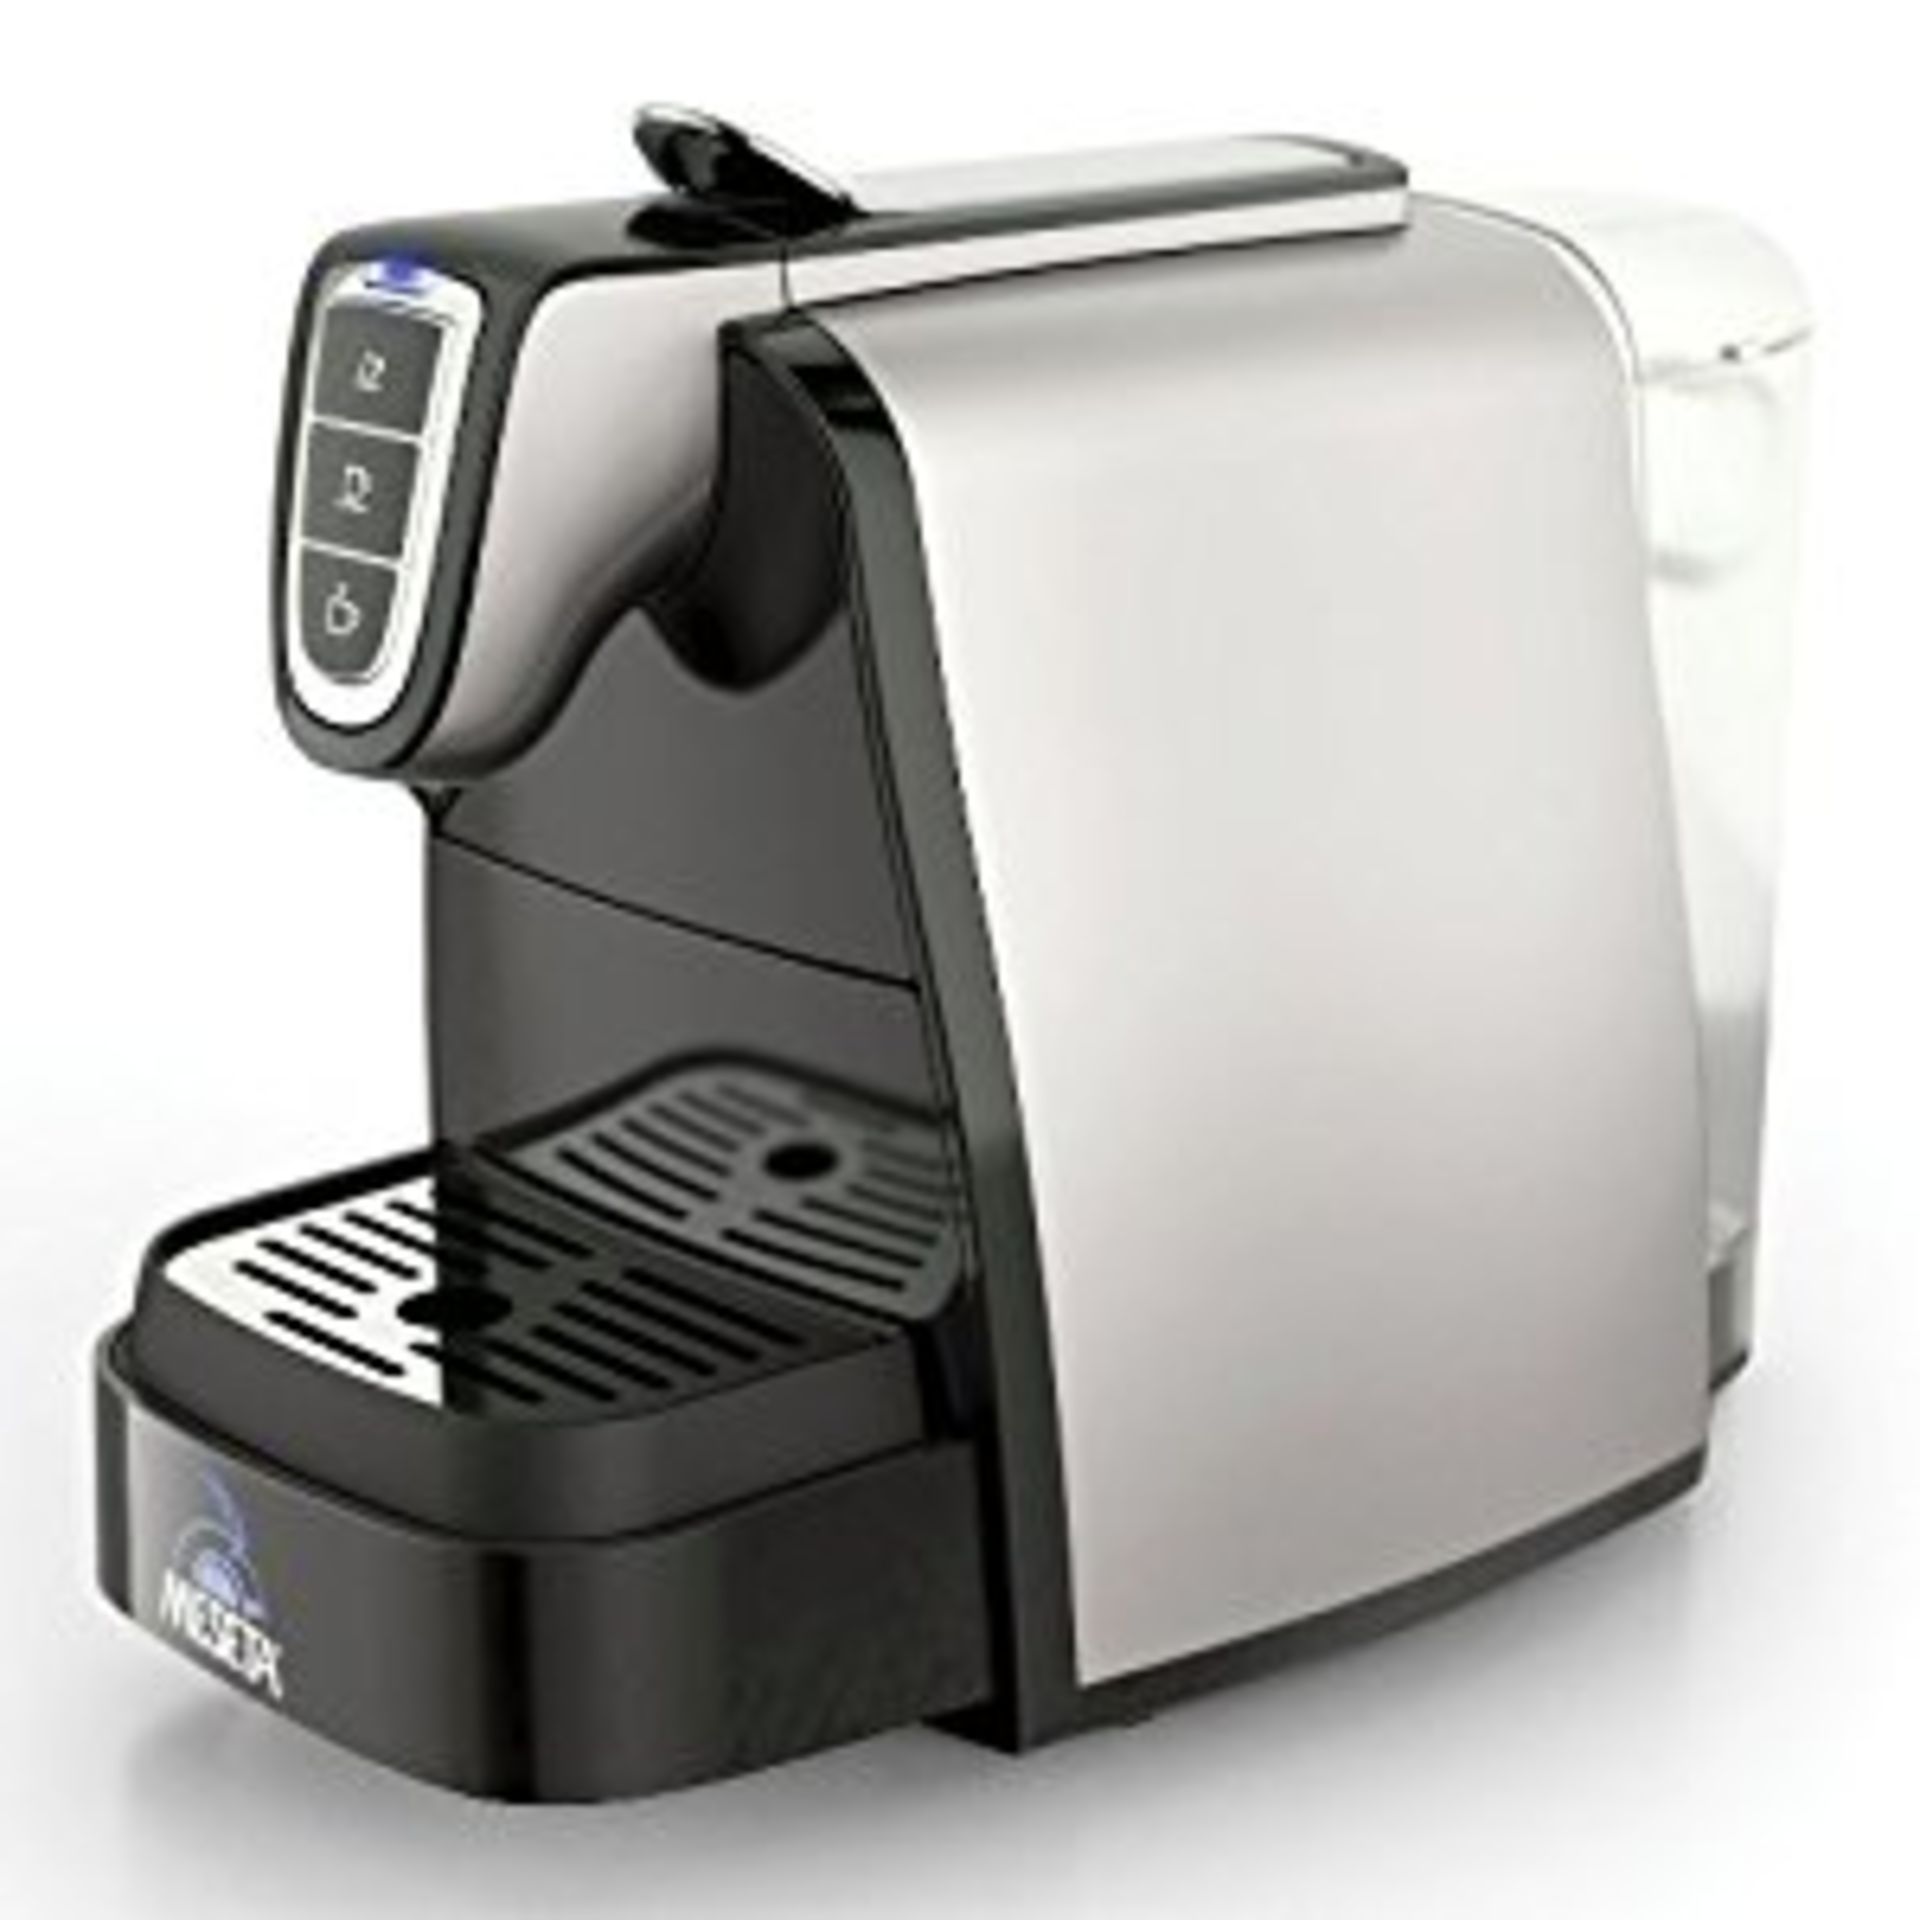 V *TRADE QTY* Brand New Meseta Coffee Capsule System Grey - Automatic Capsule Dispenser - Adjustable